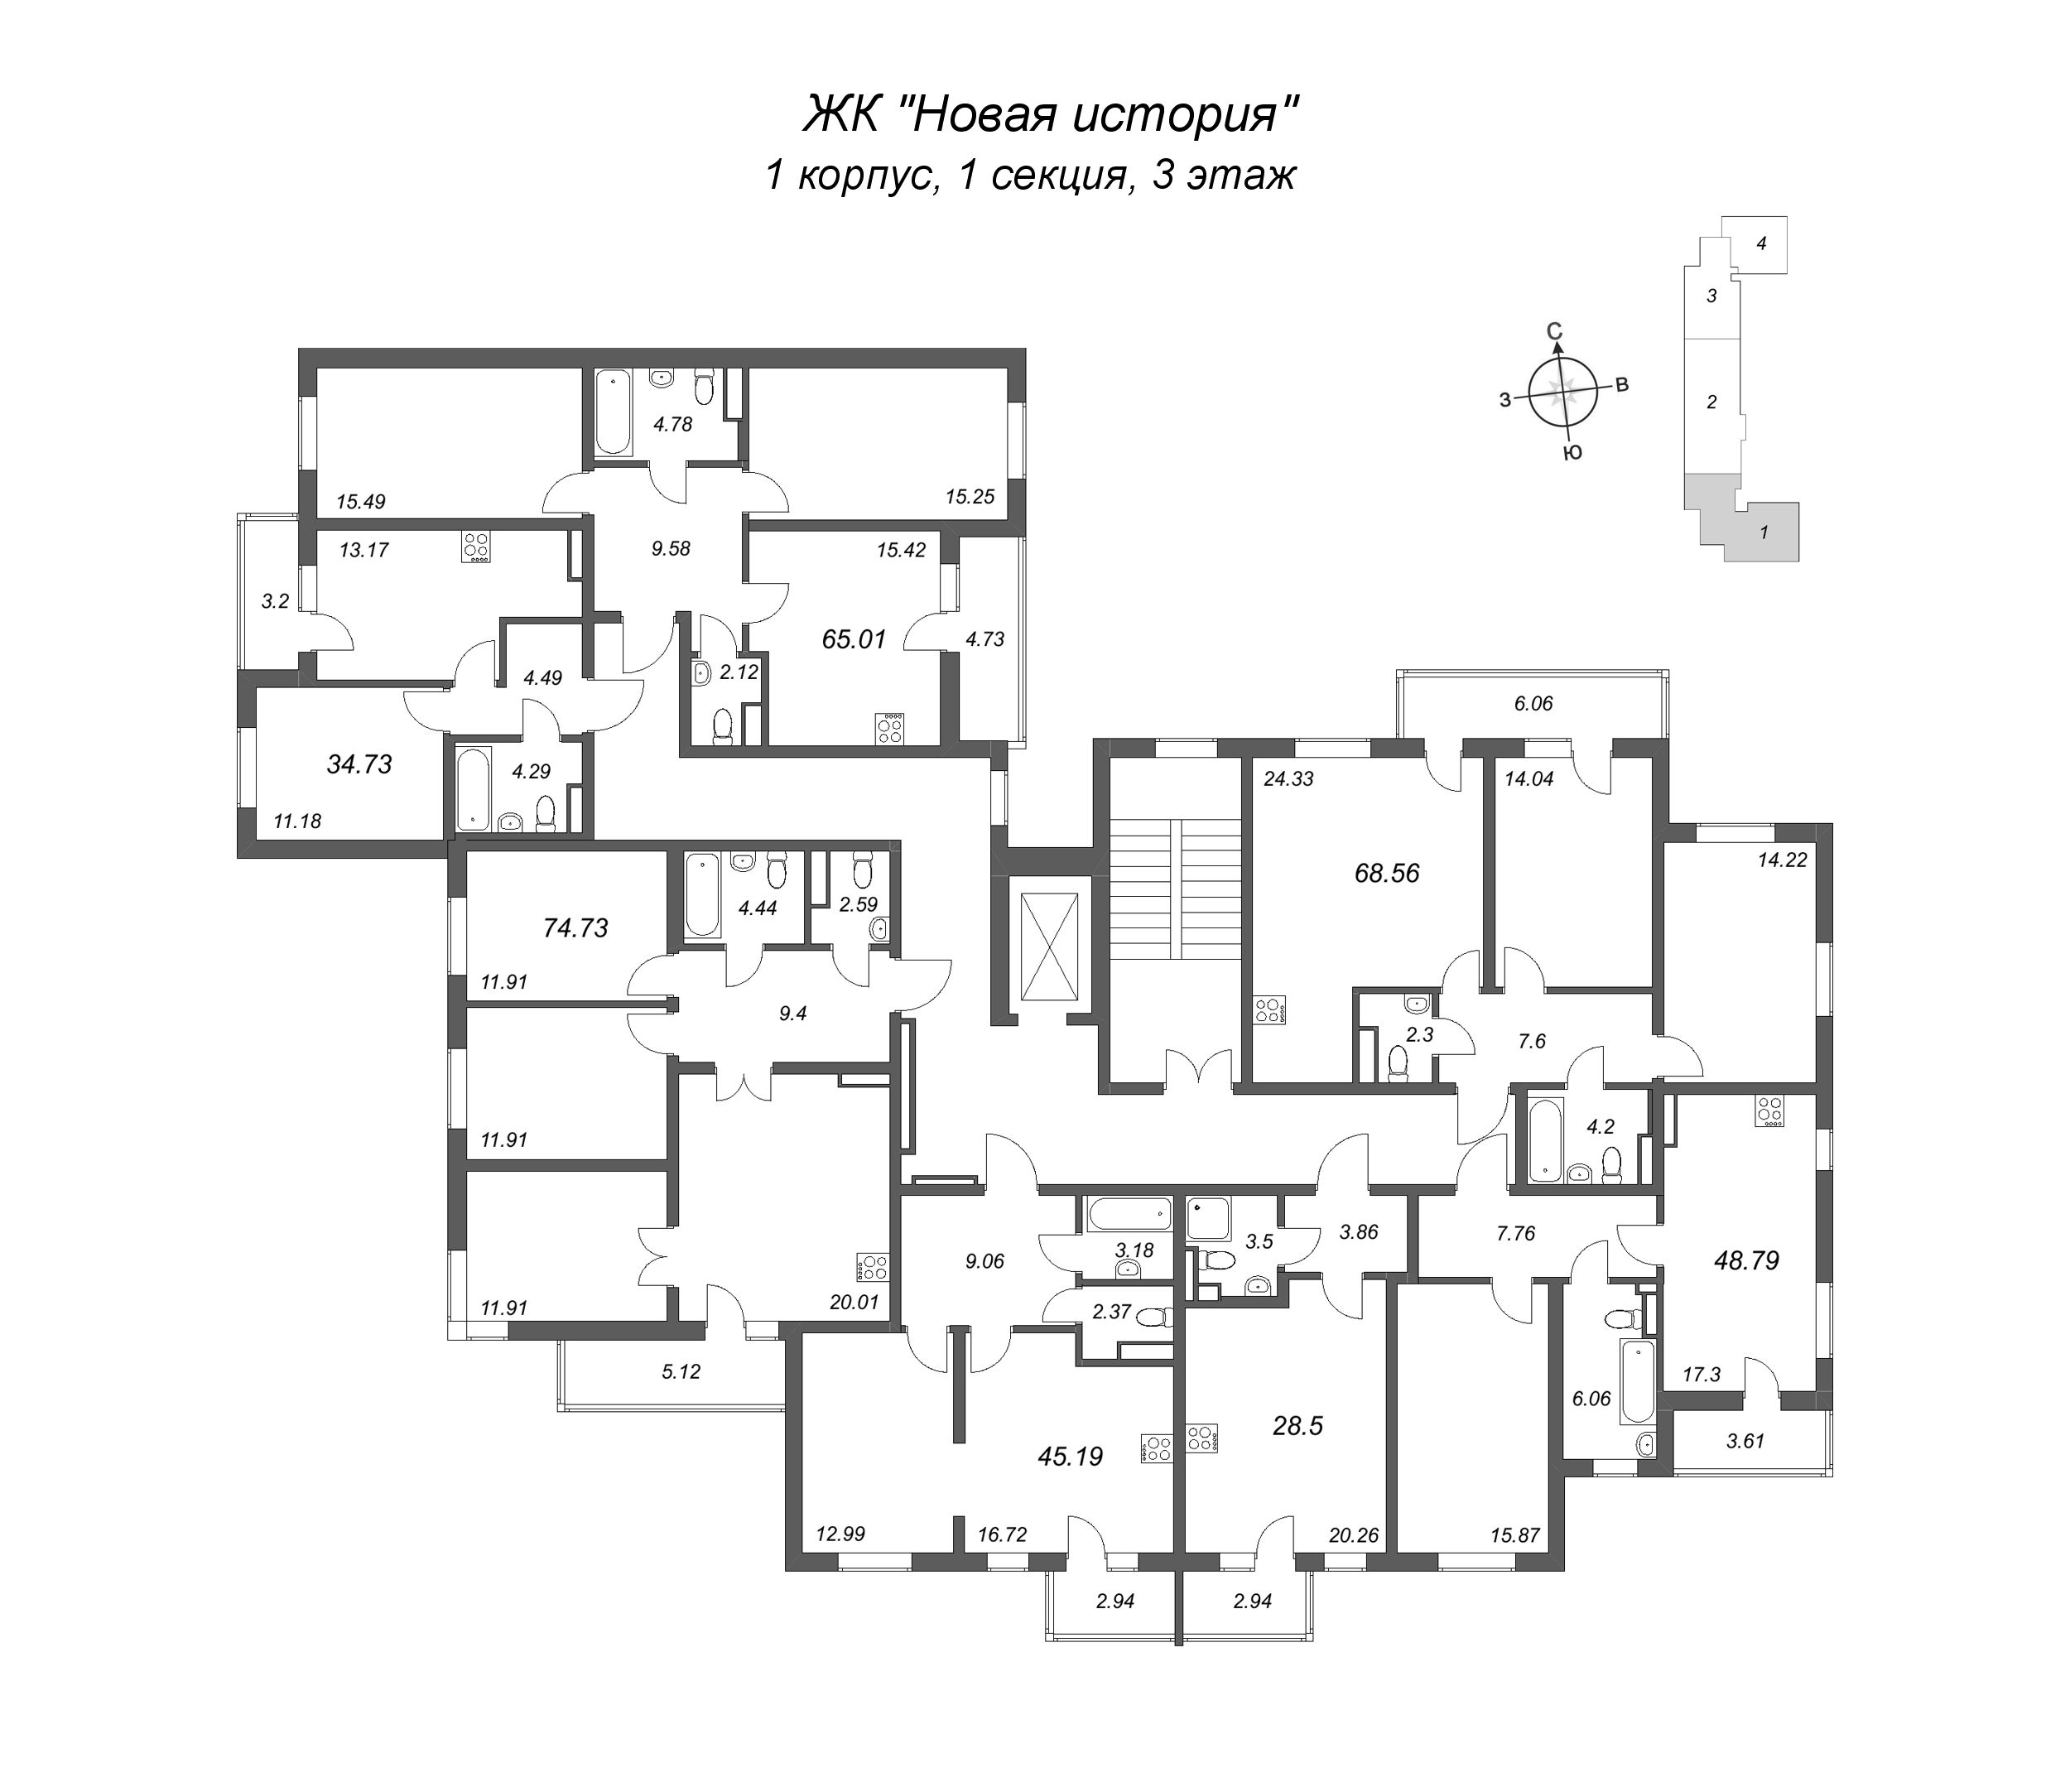 3-комнатная (Евро) квартира, 68.56 м² - планировка этажа